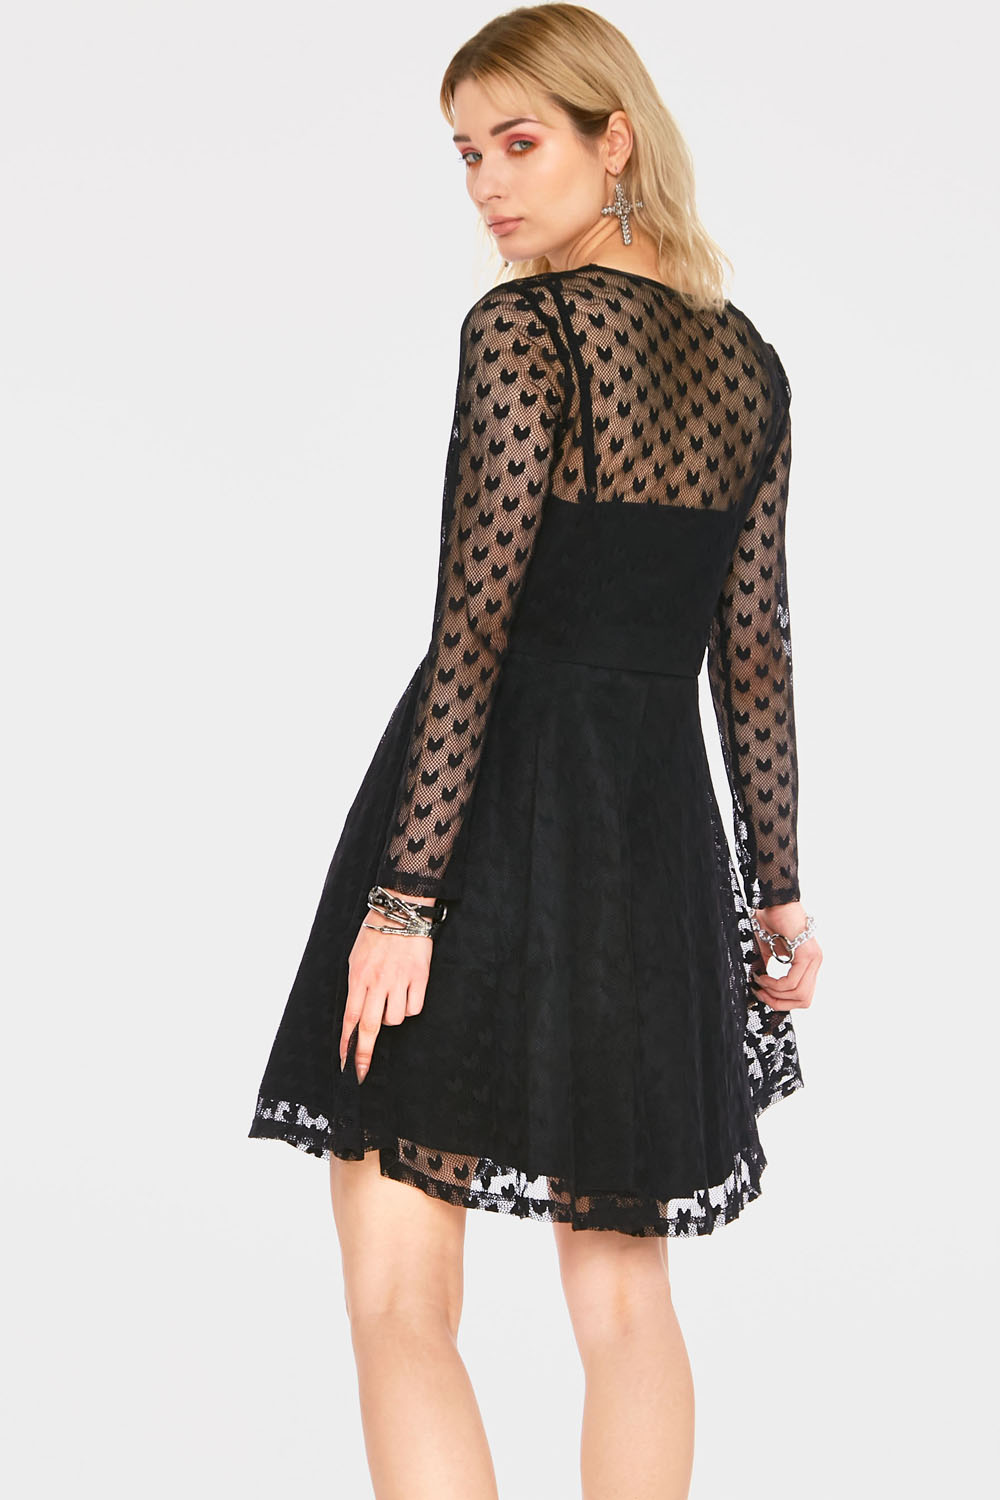 Heartcore Black Dress | Alternative Clothing Store | Gothic, Punk ...